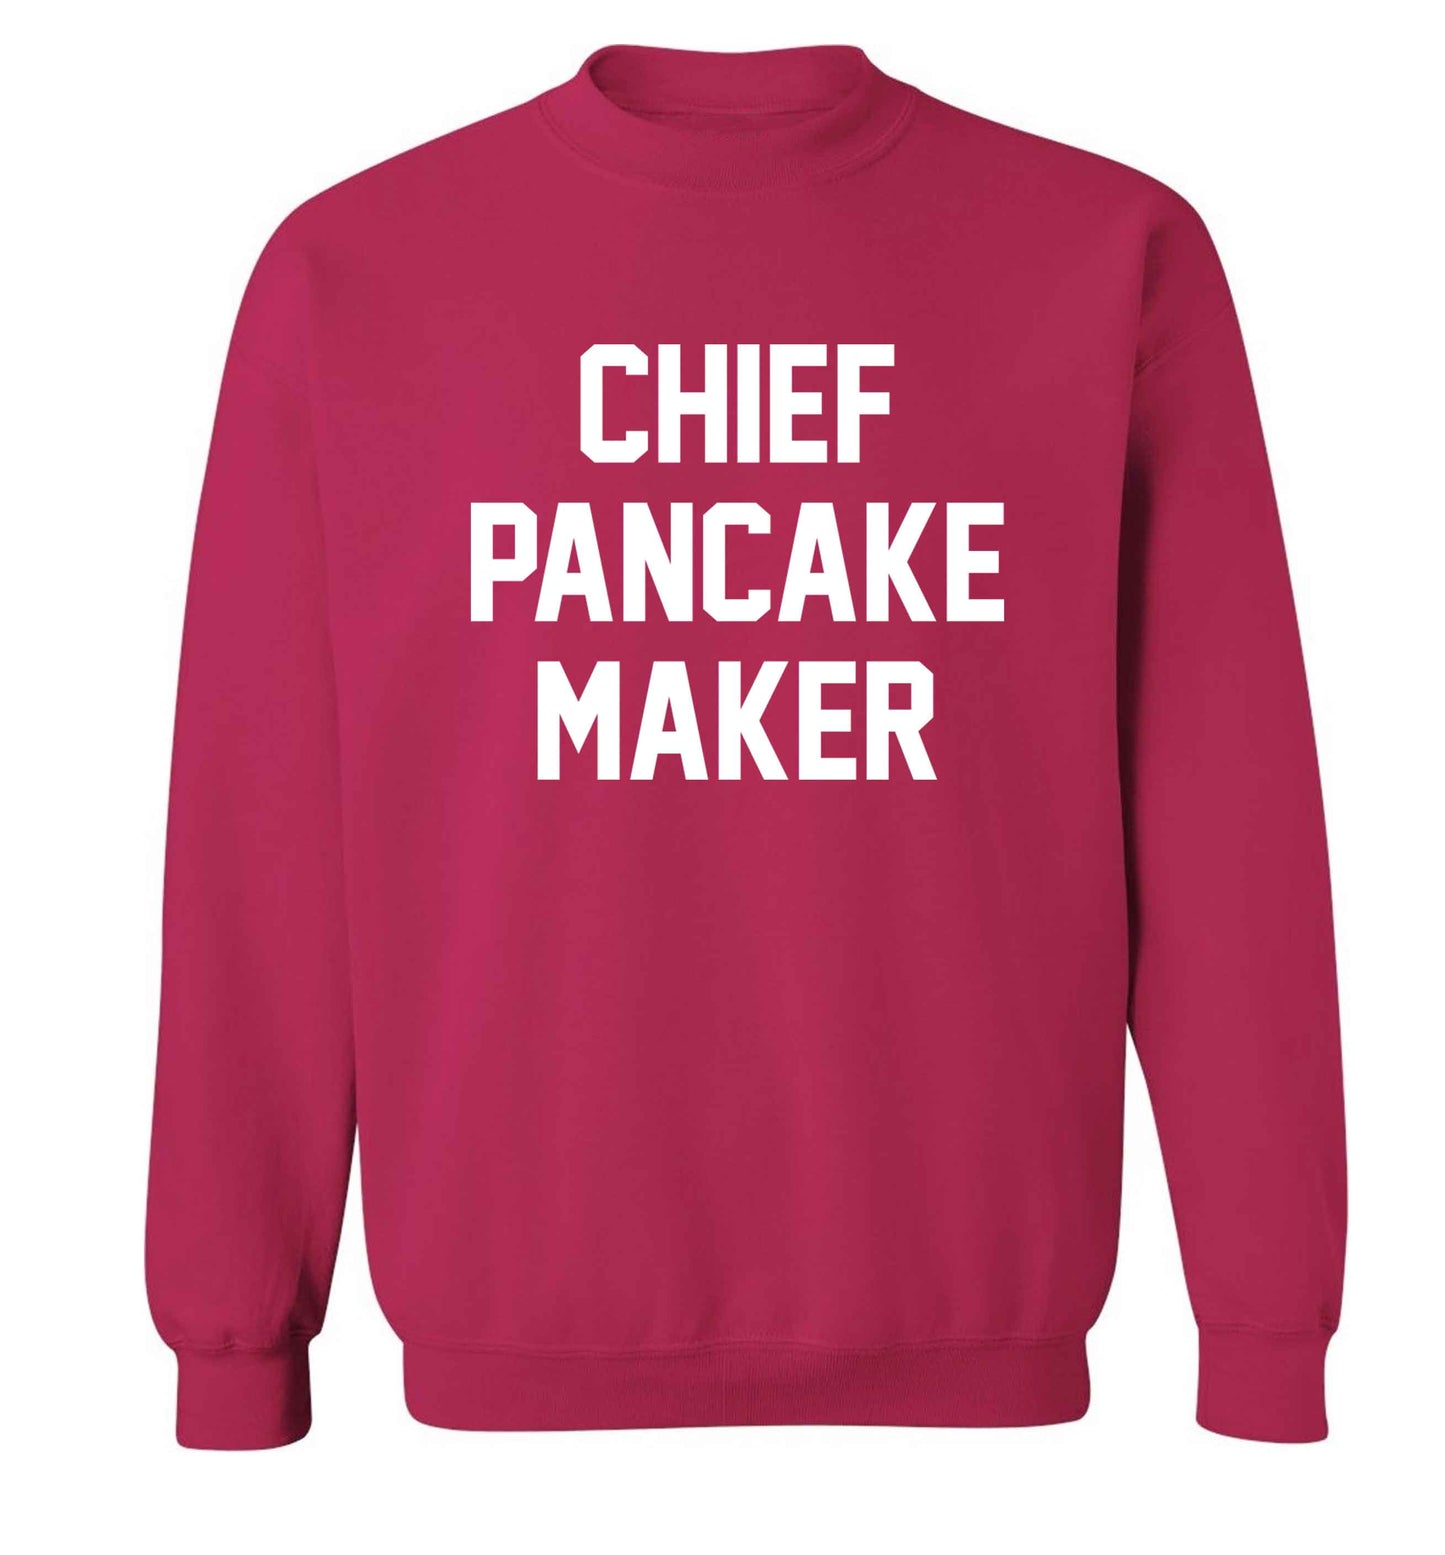 Chief pancake maker adult's unisex pink sweater 2XL